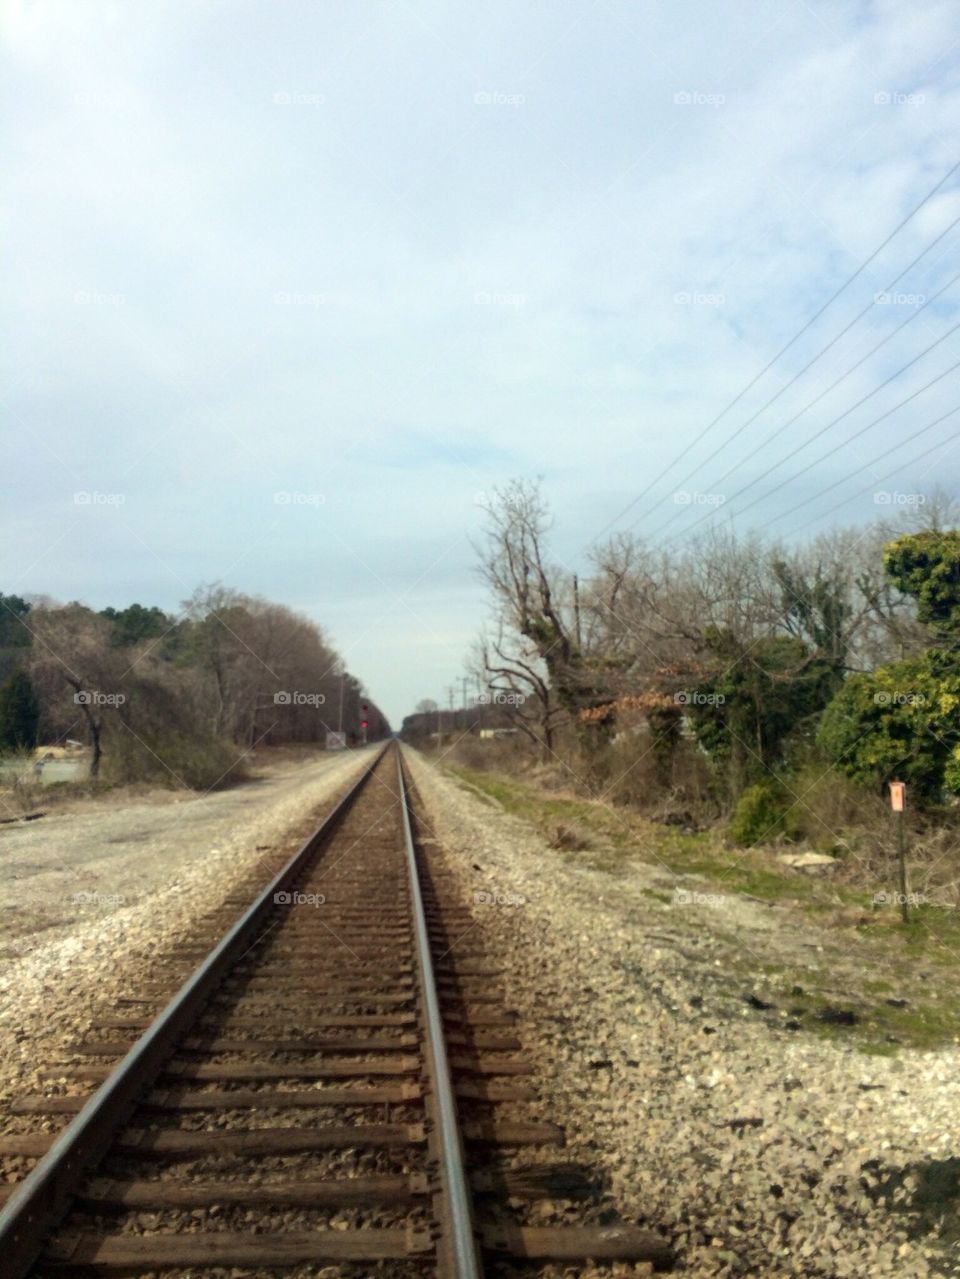 Down the Railroad tracks